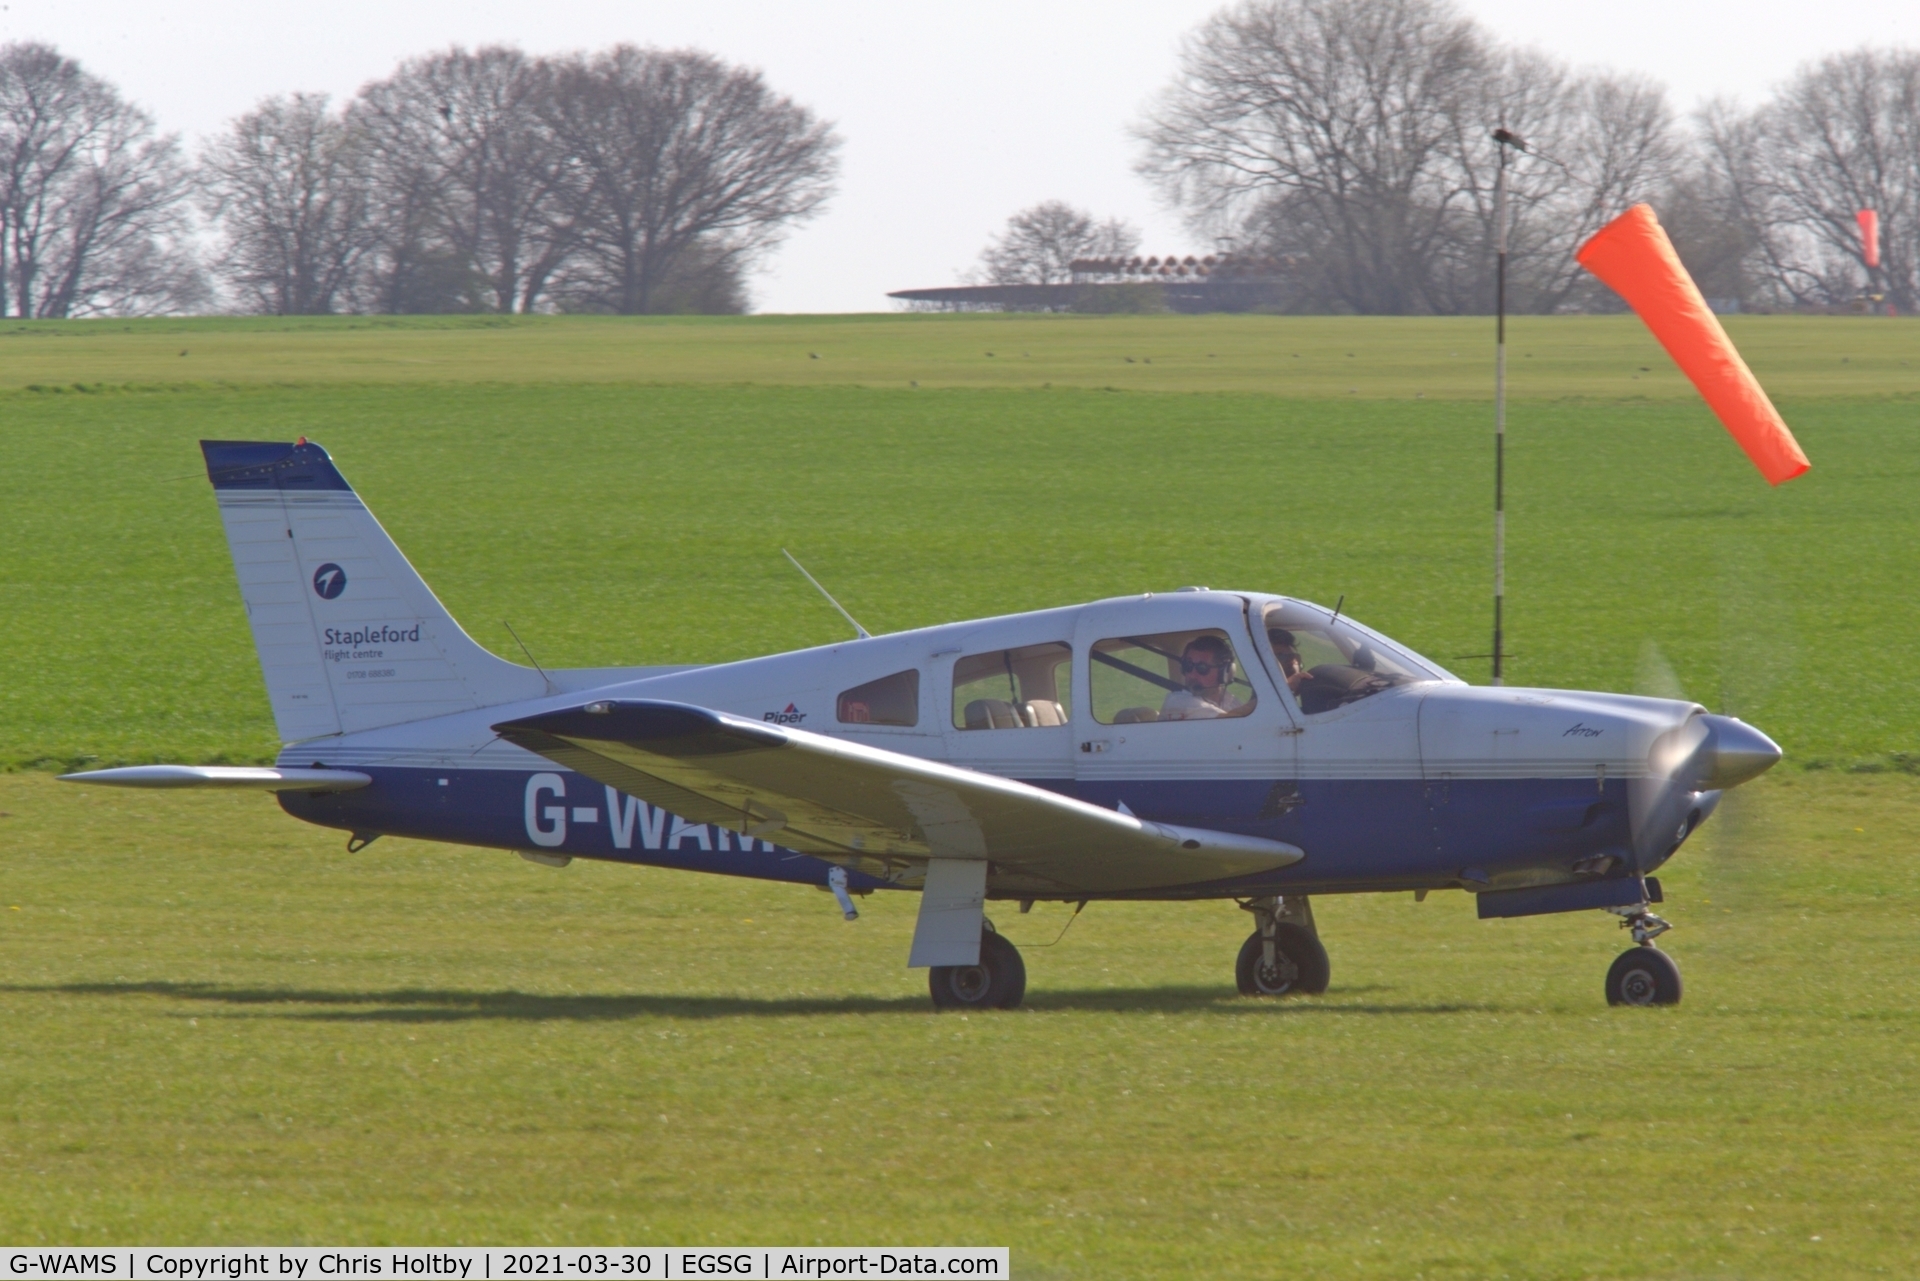 G-WAMS, 2001 Piper PA-28R-201 Cherokee Arrow III C/N 2844050, Landed at Stapleford Tawney, Essex